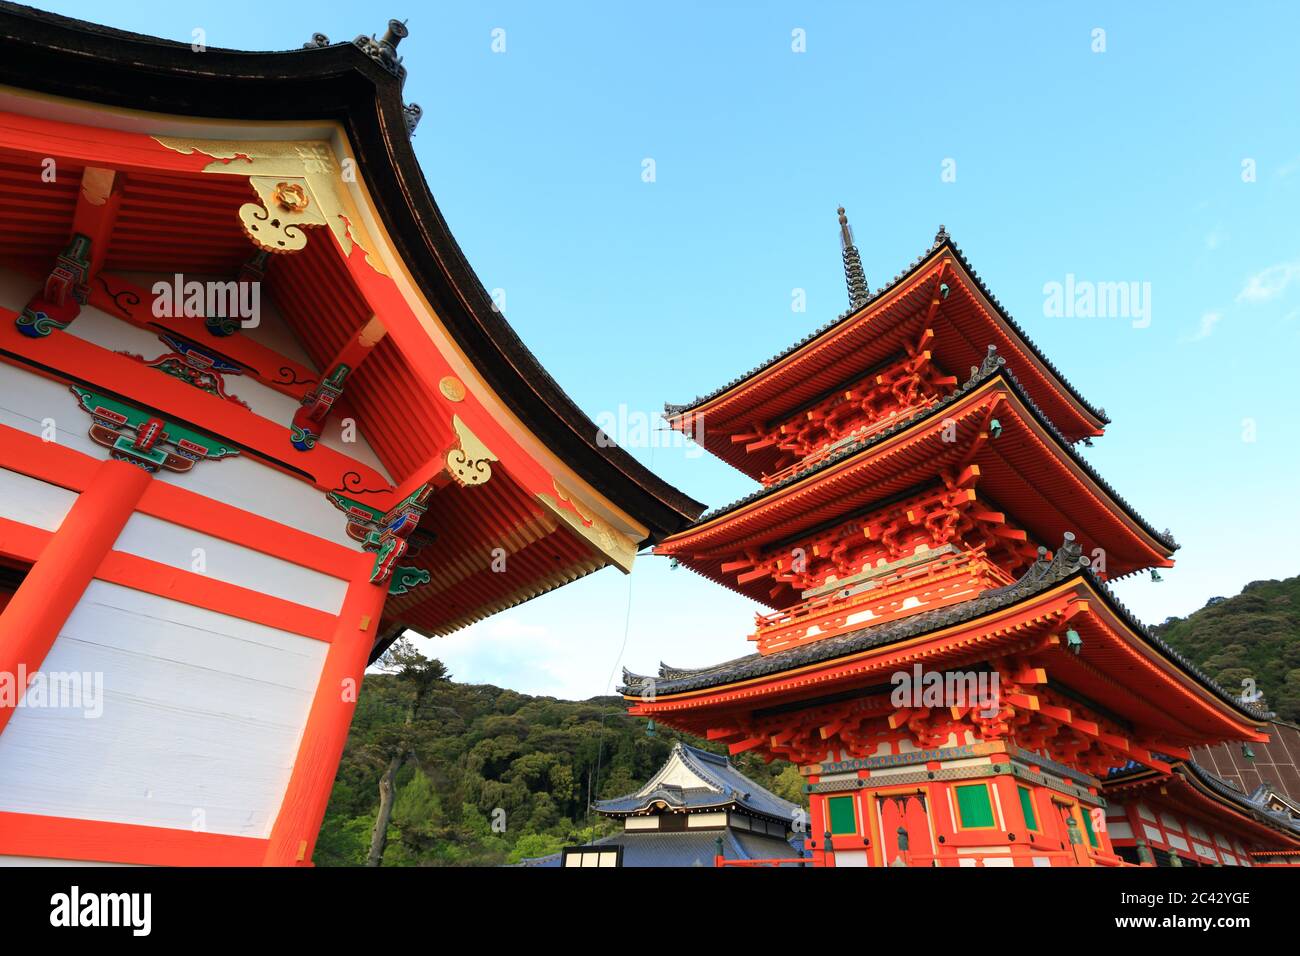 Kyoto, Japan - 15th April, 2018. Kiyomizu-dera Shrine in Kyoto. National and international tourists flock here all year long. Stock Photo